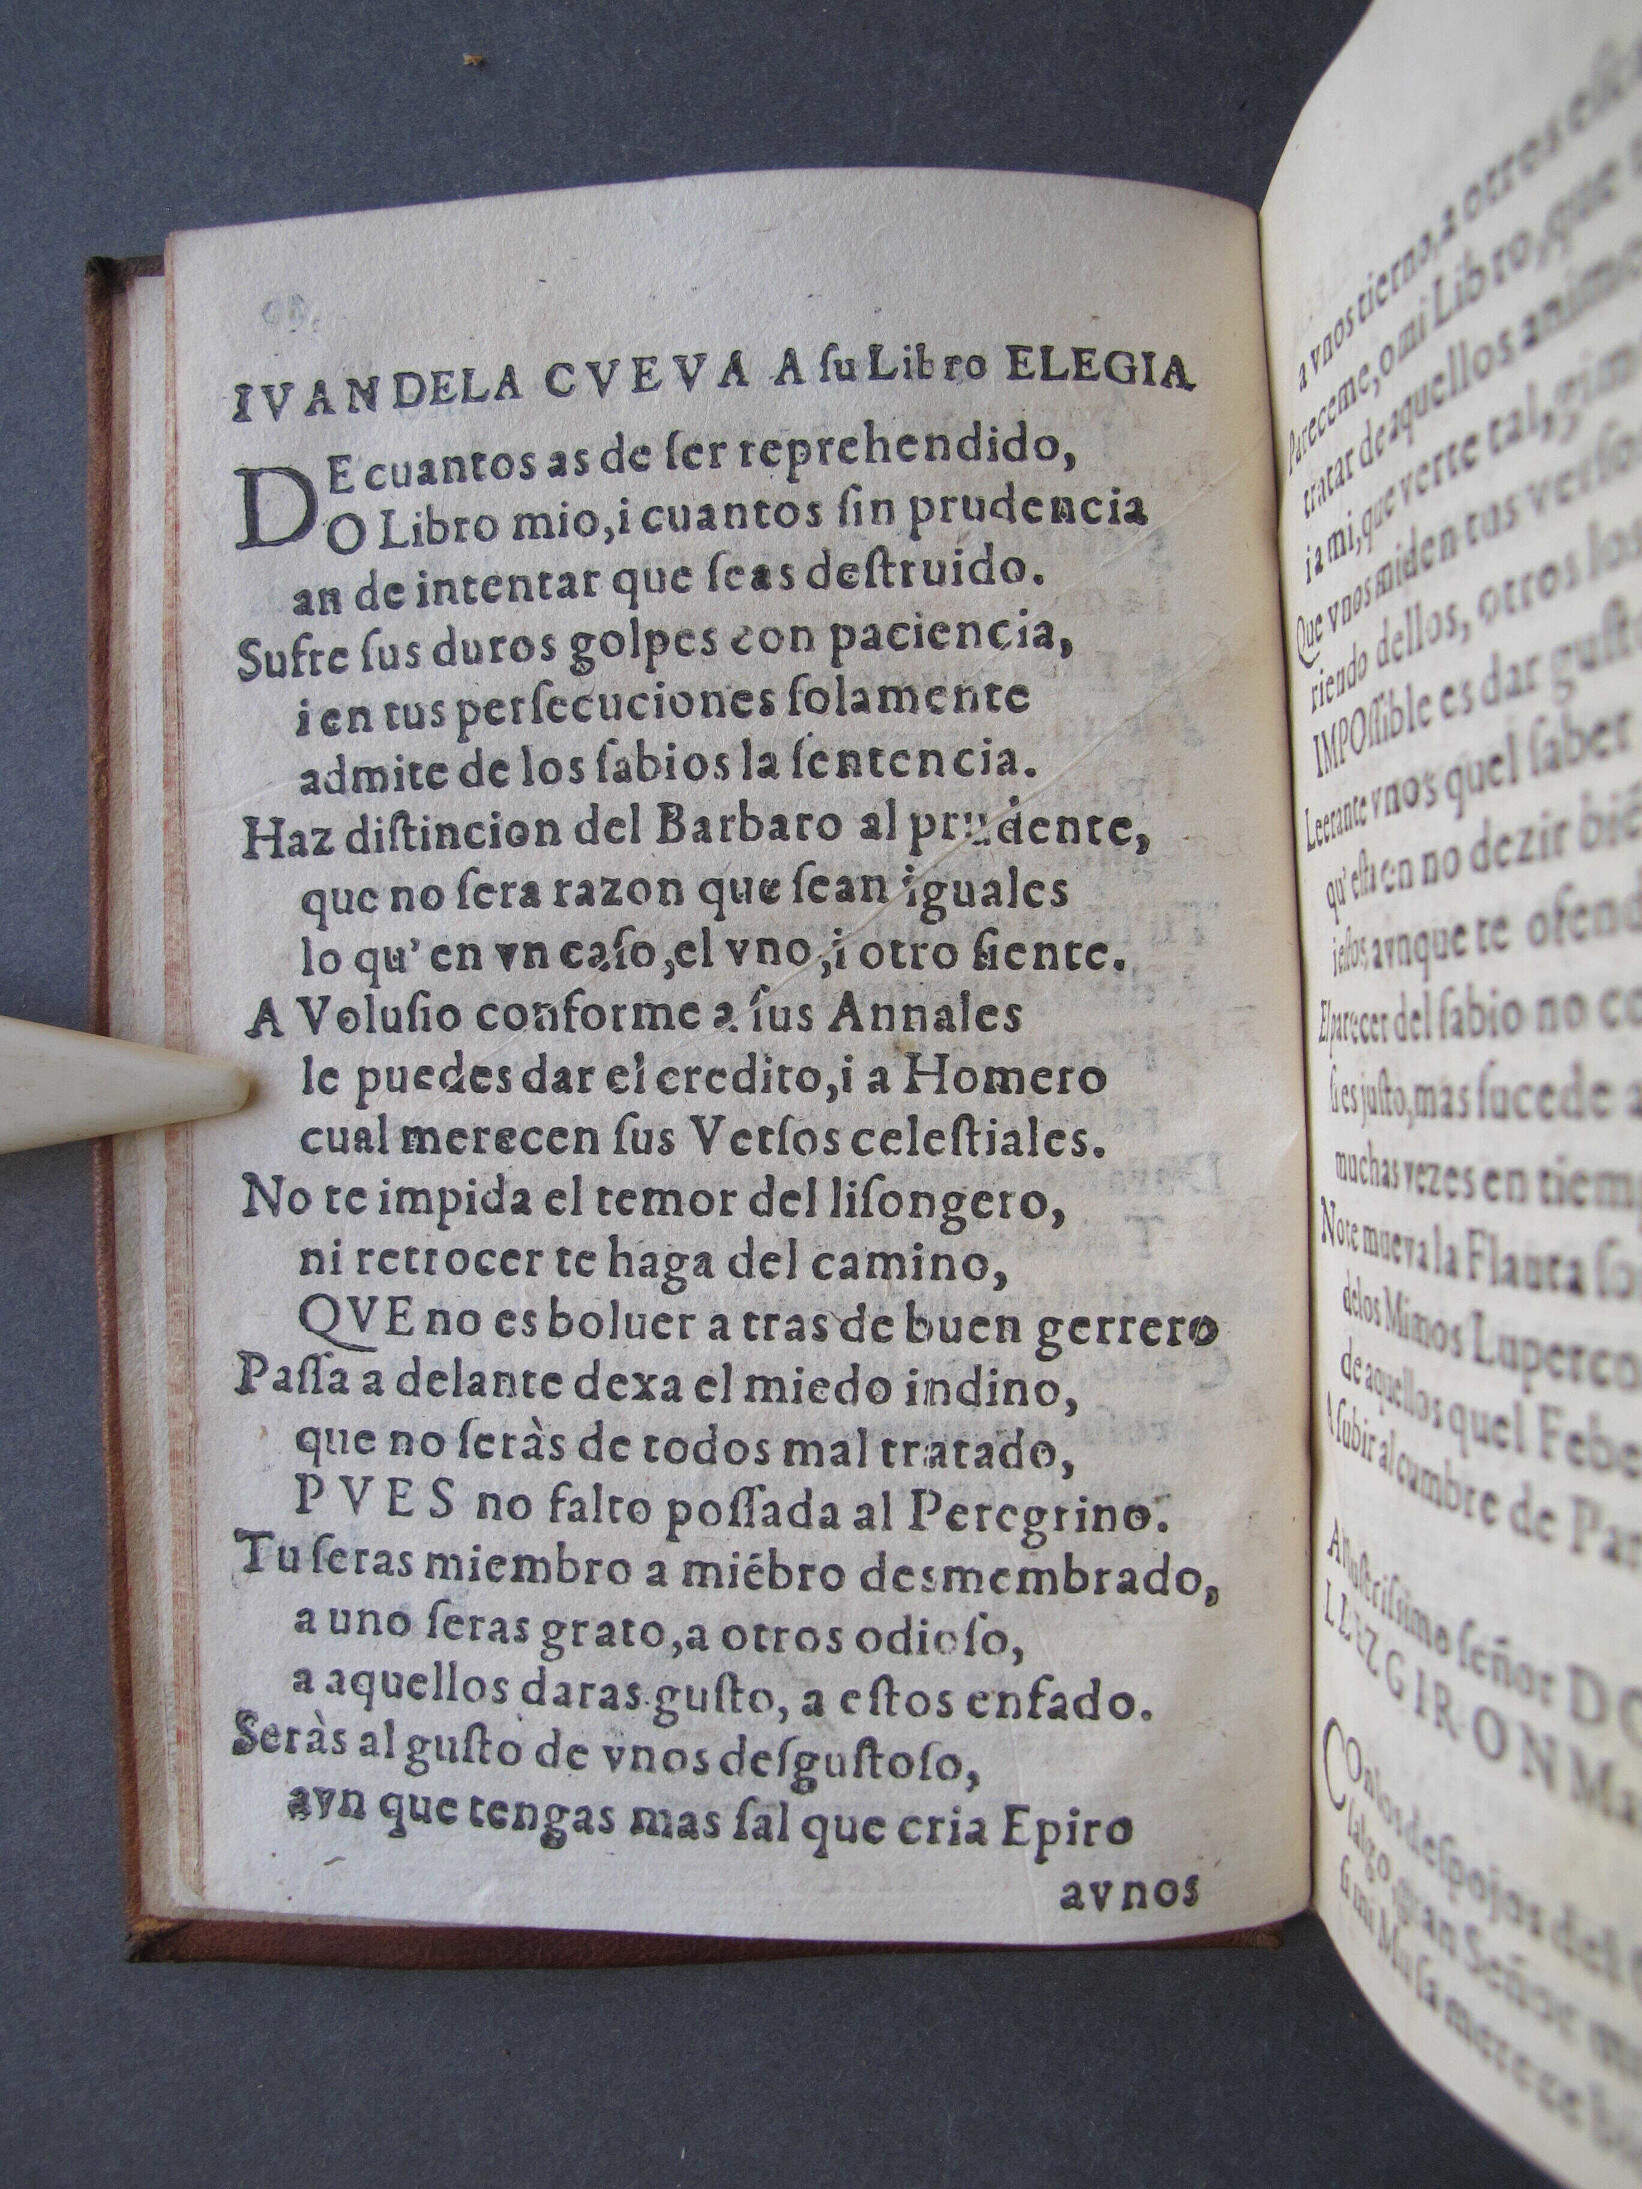 Folio B2 verso